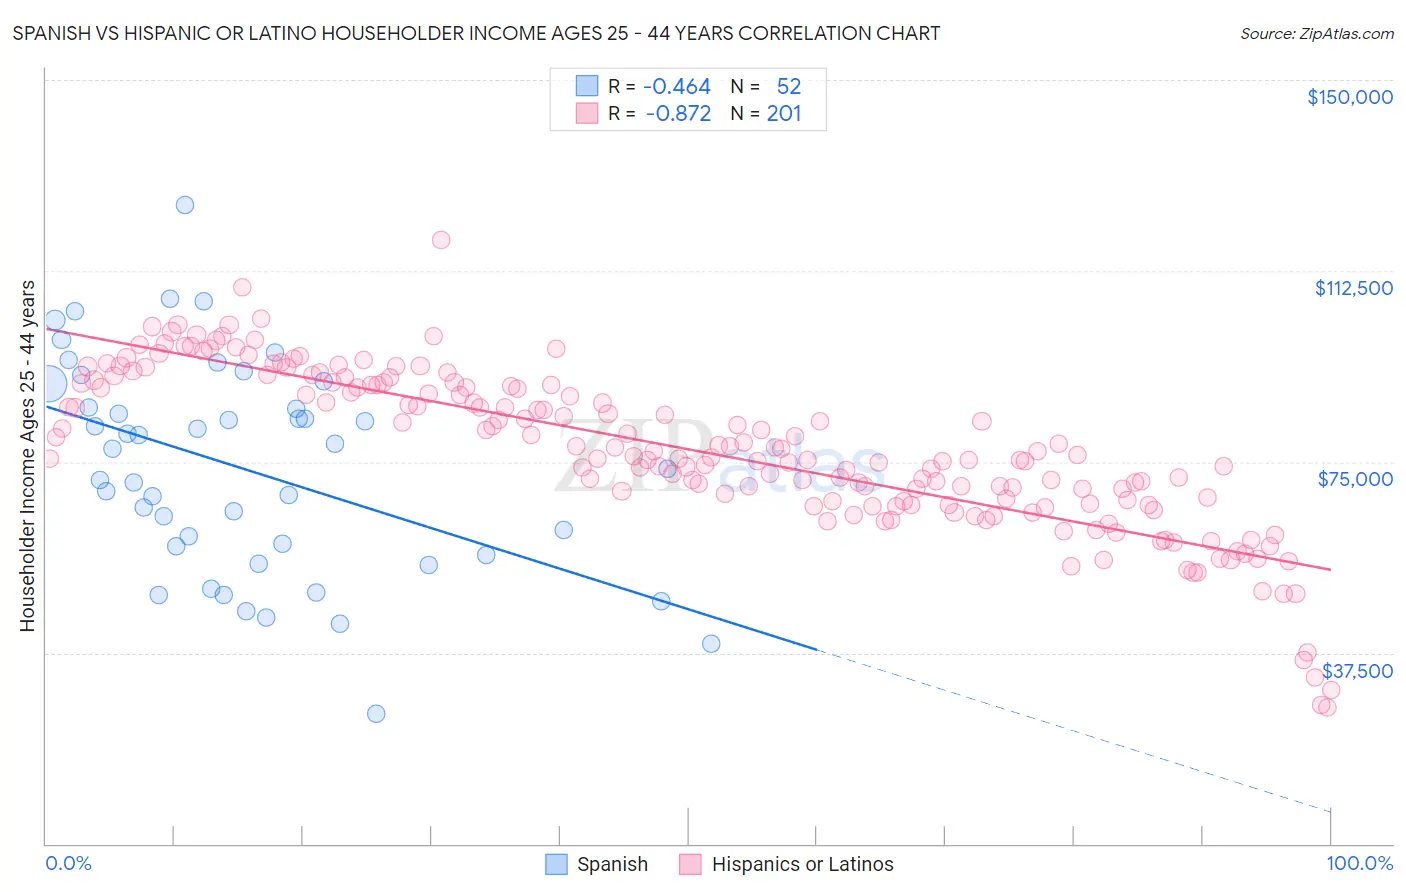 Spanish vs Hispanic or Latino Householder Income Ages 25 - 44 years